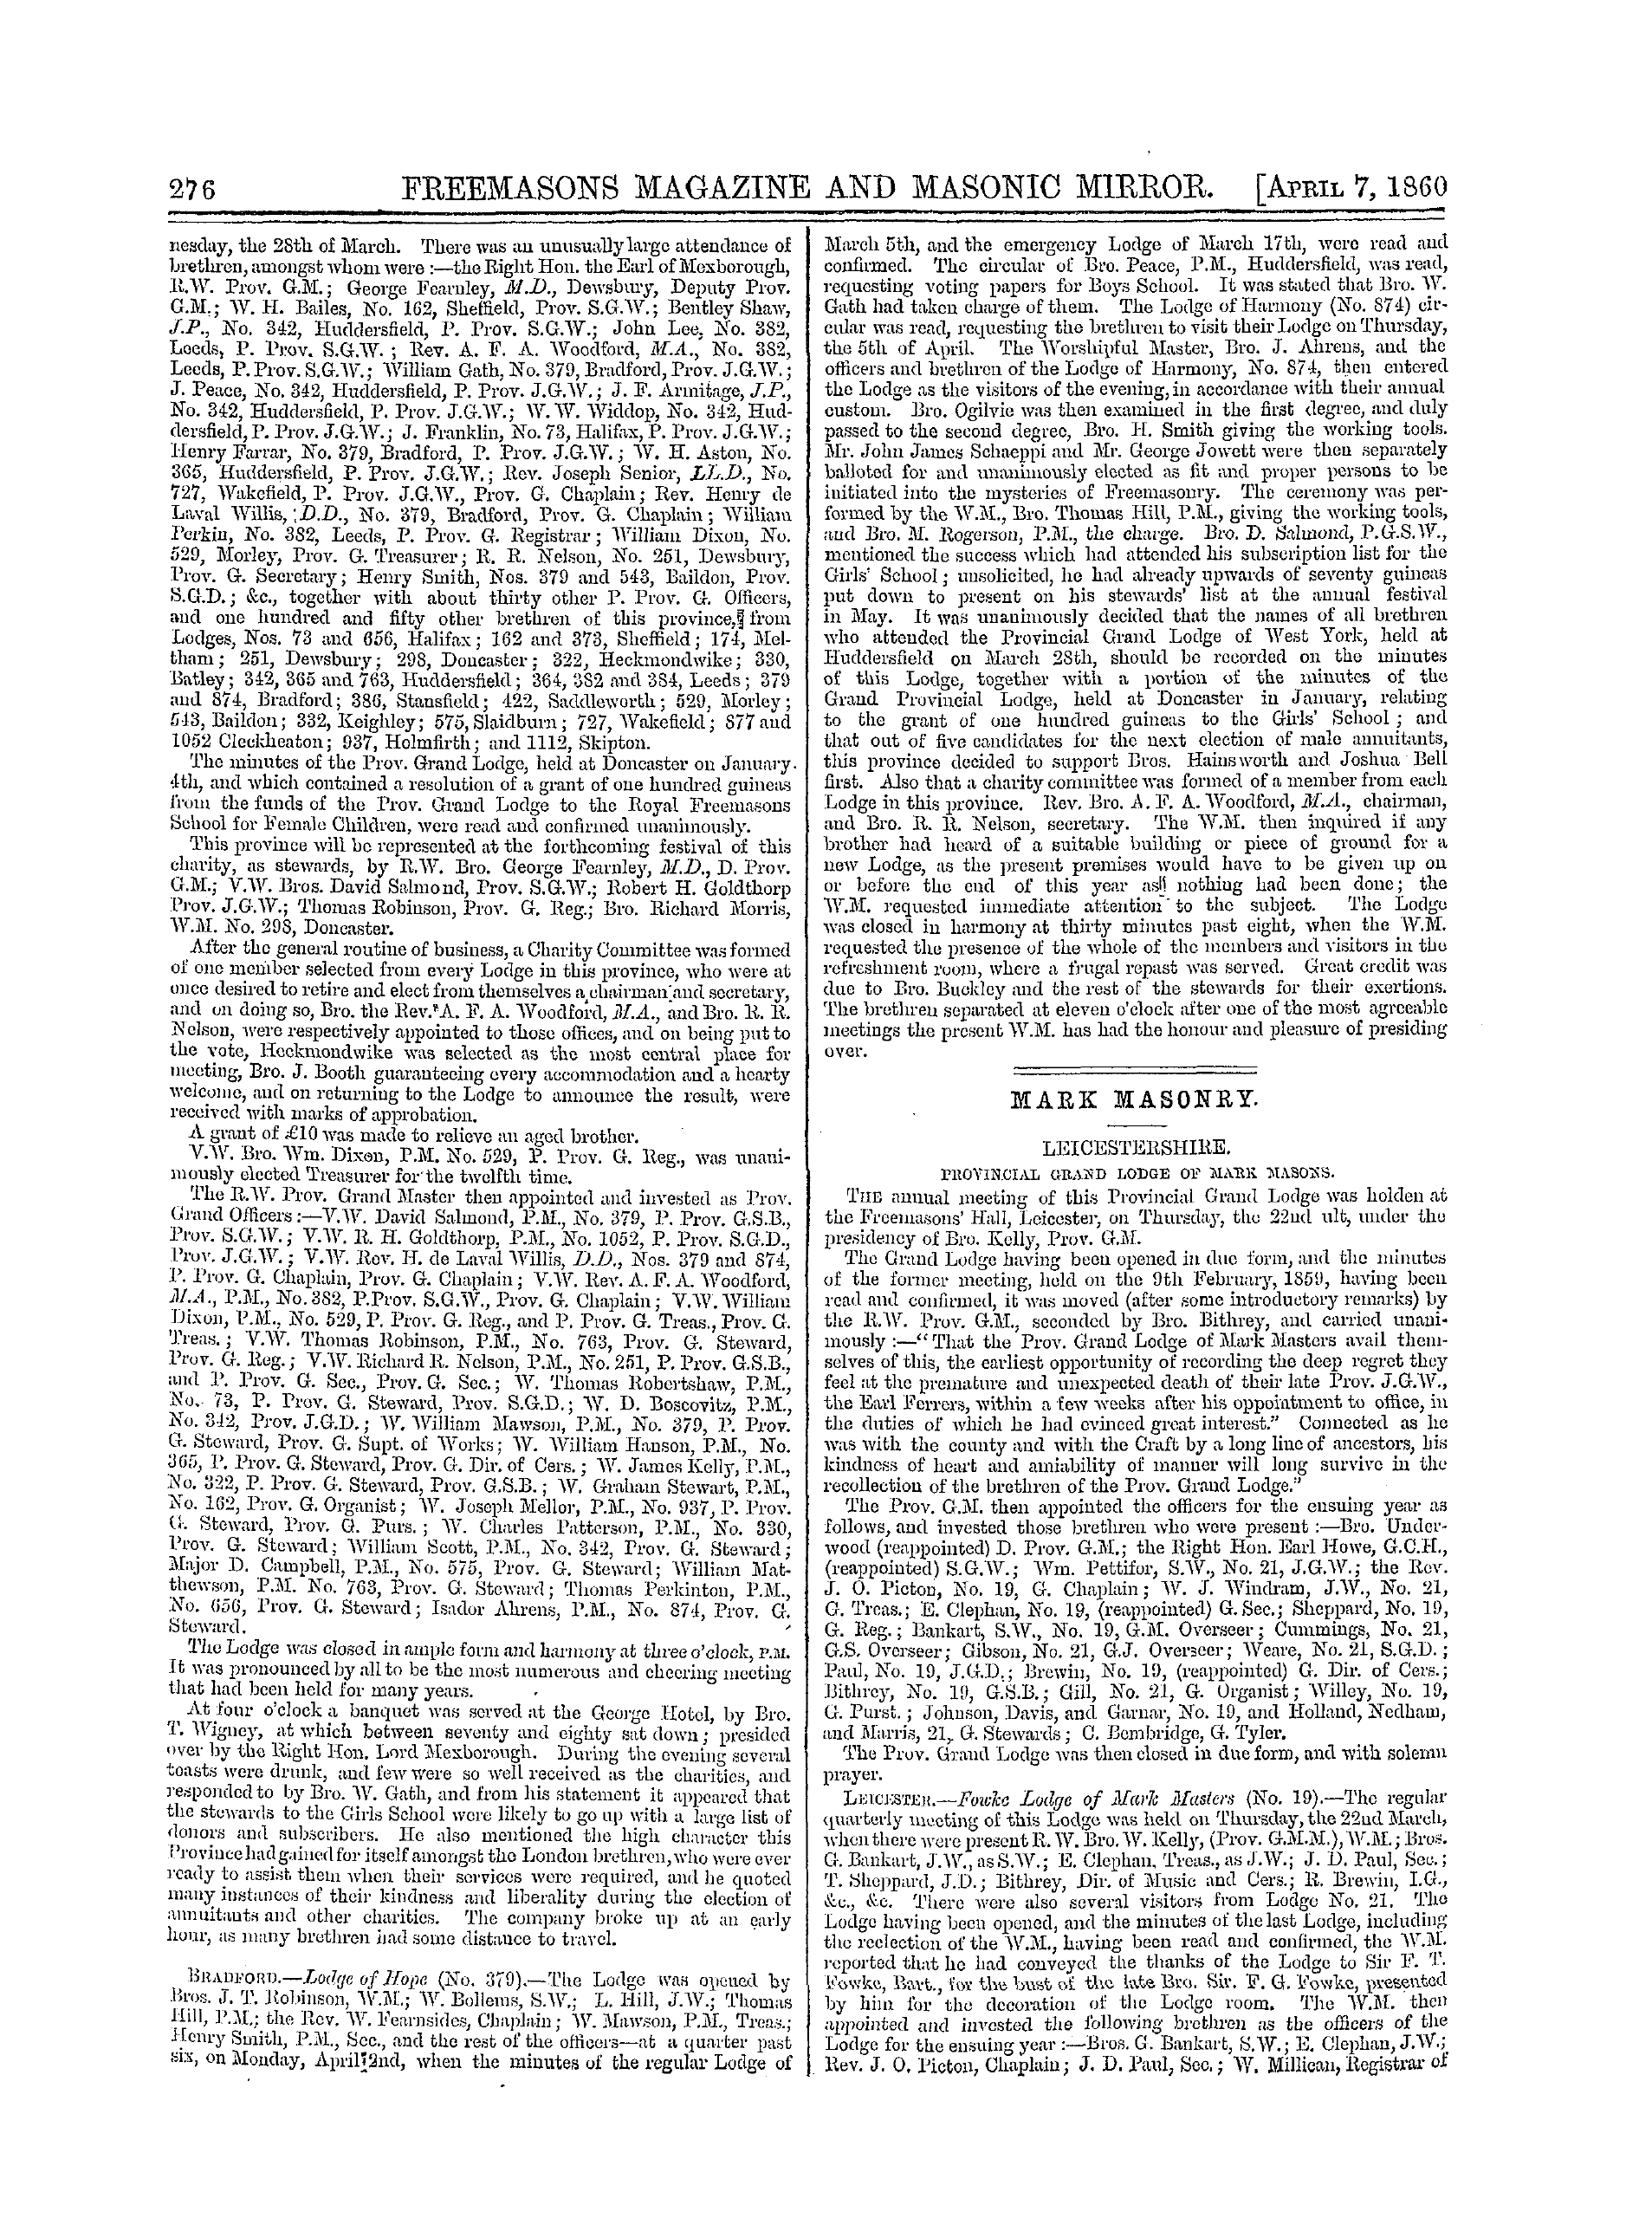 The Freemasons' Monthly Magazine: 1860-04-07 - Provincial.